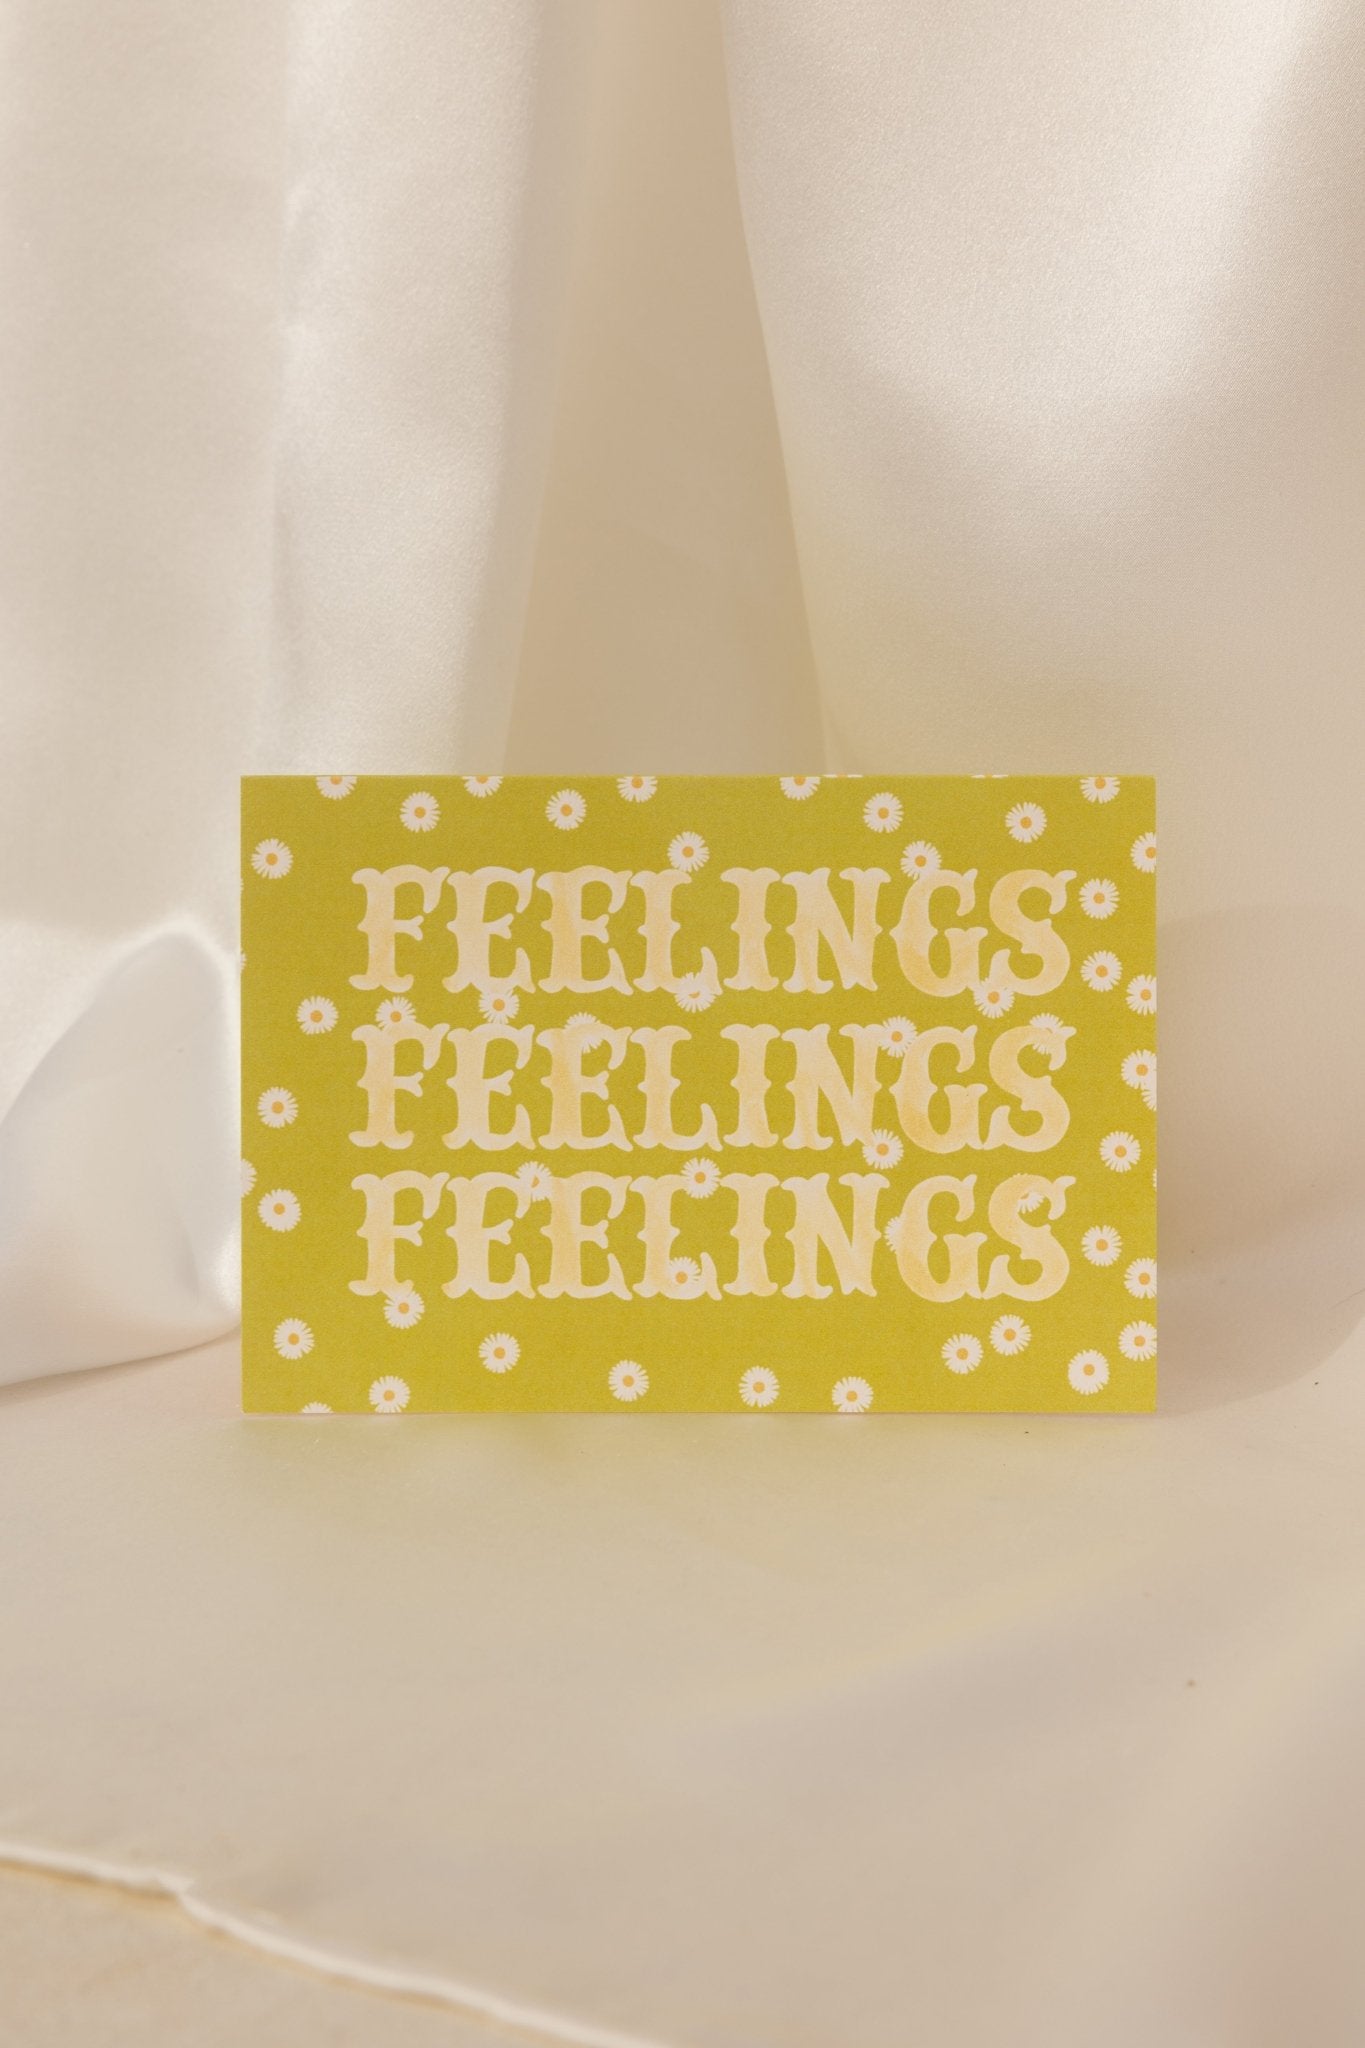 Feelings card